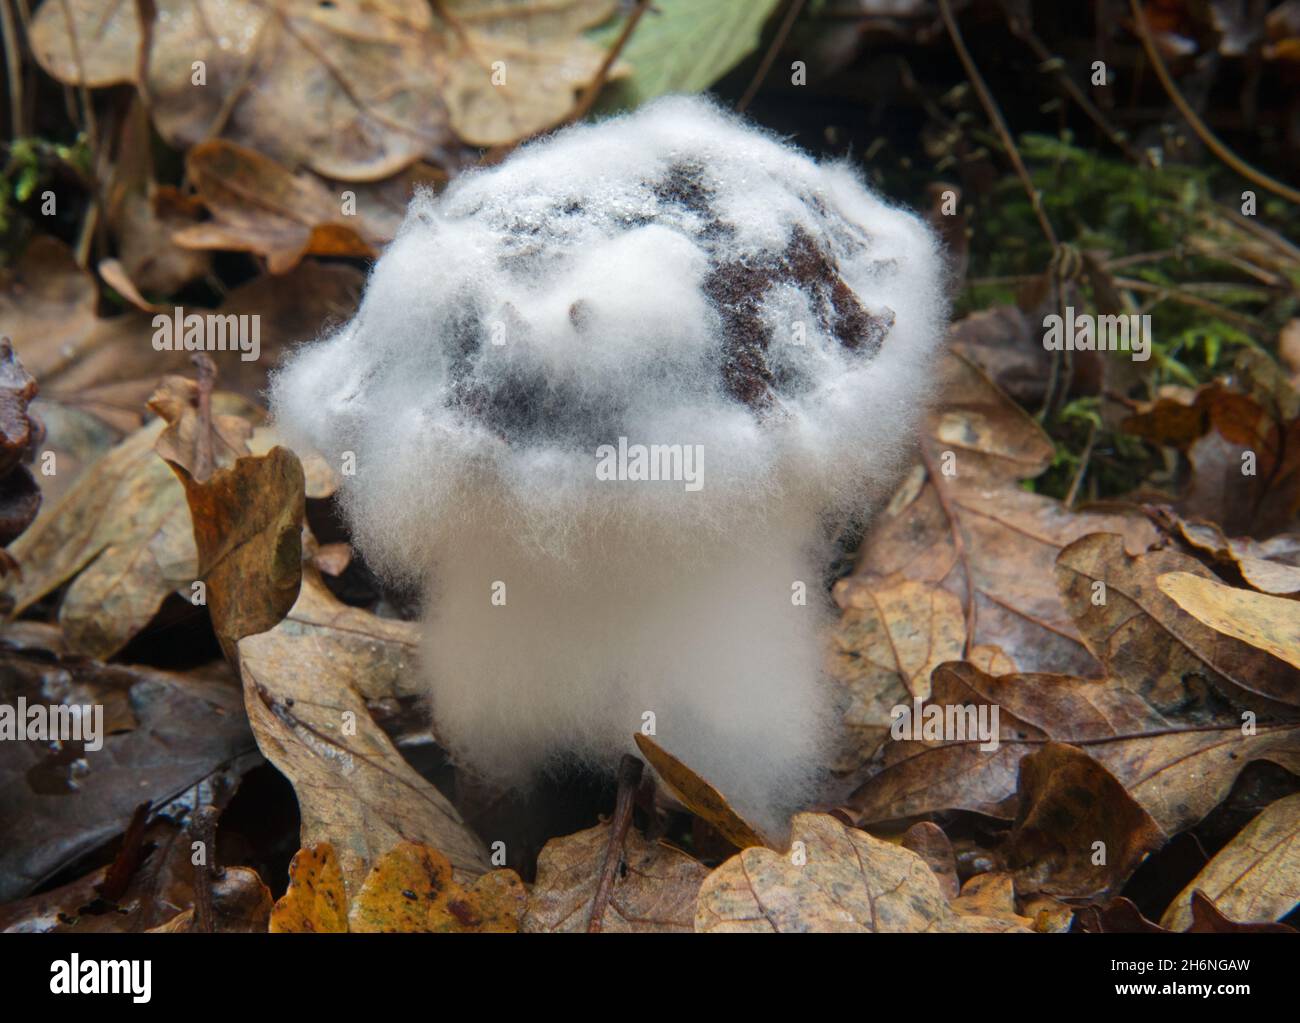 Moldy mushroom between fallen leaves Stock Photo